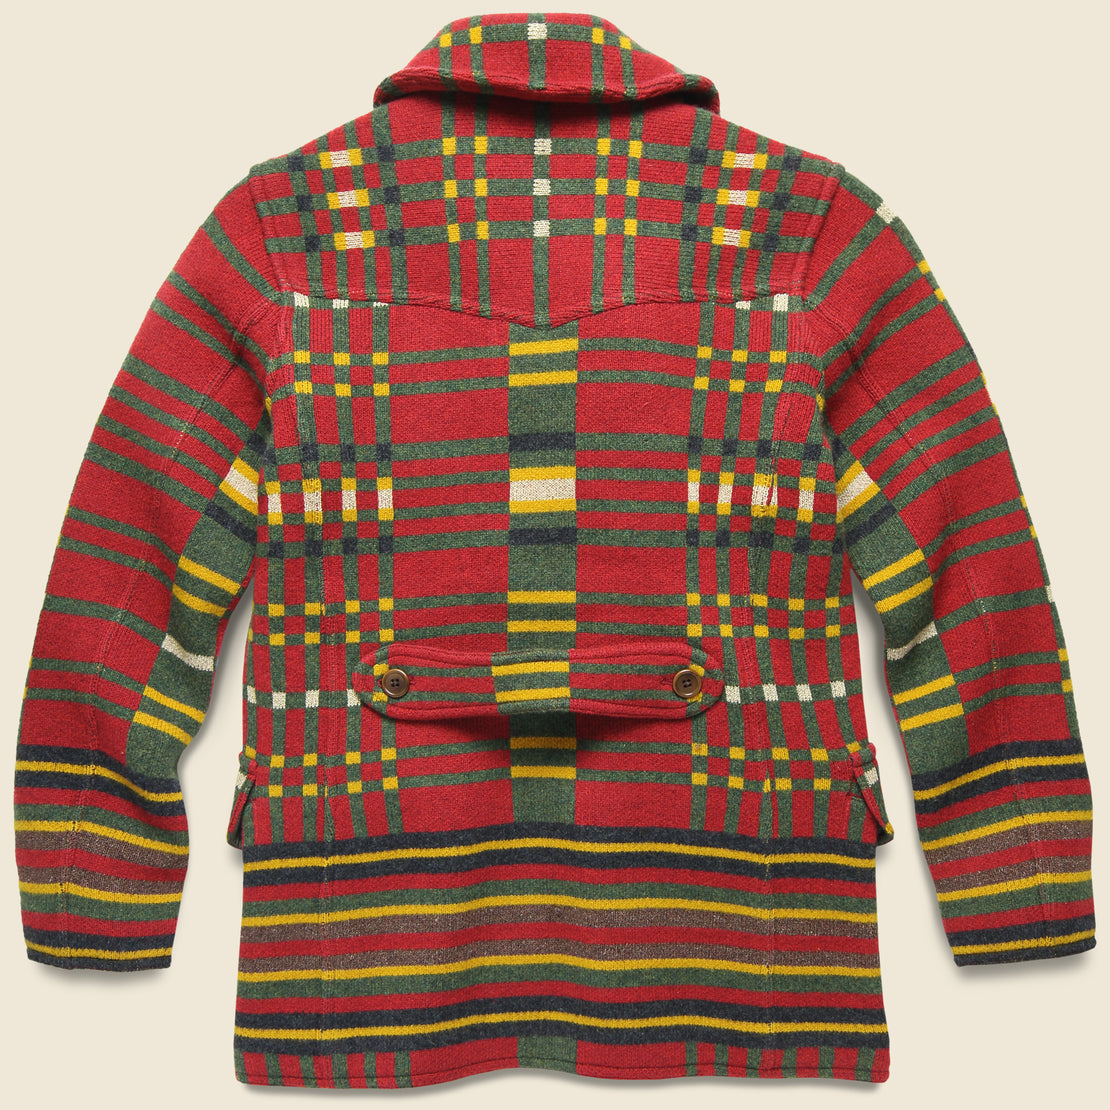 Birdseye Jacquard Sweater Jacket - Red